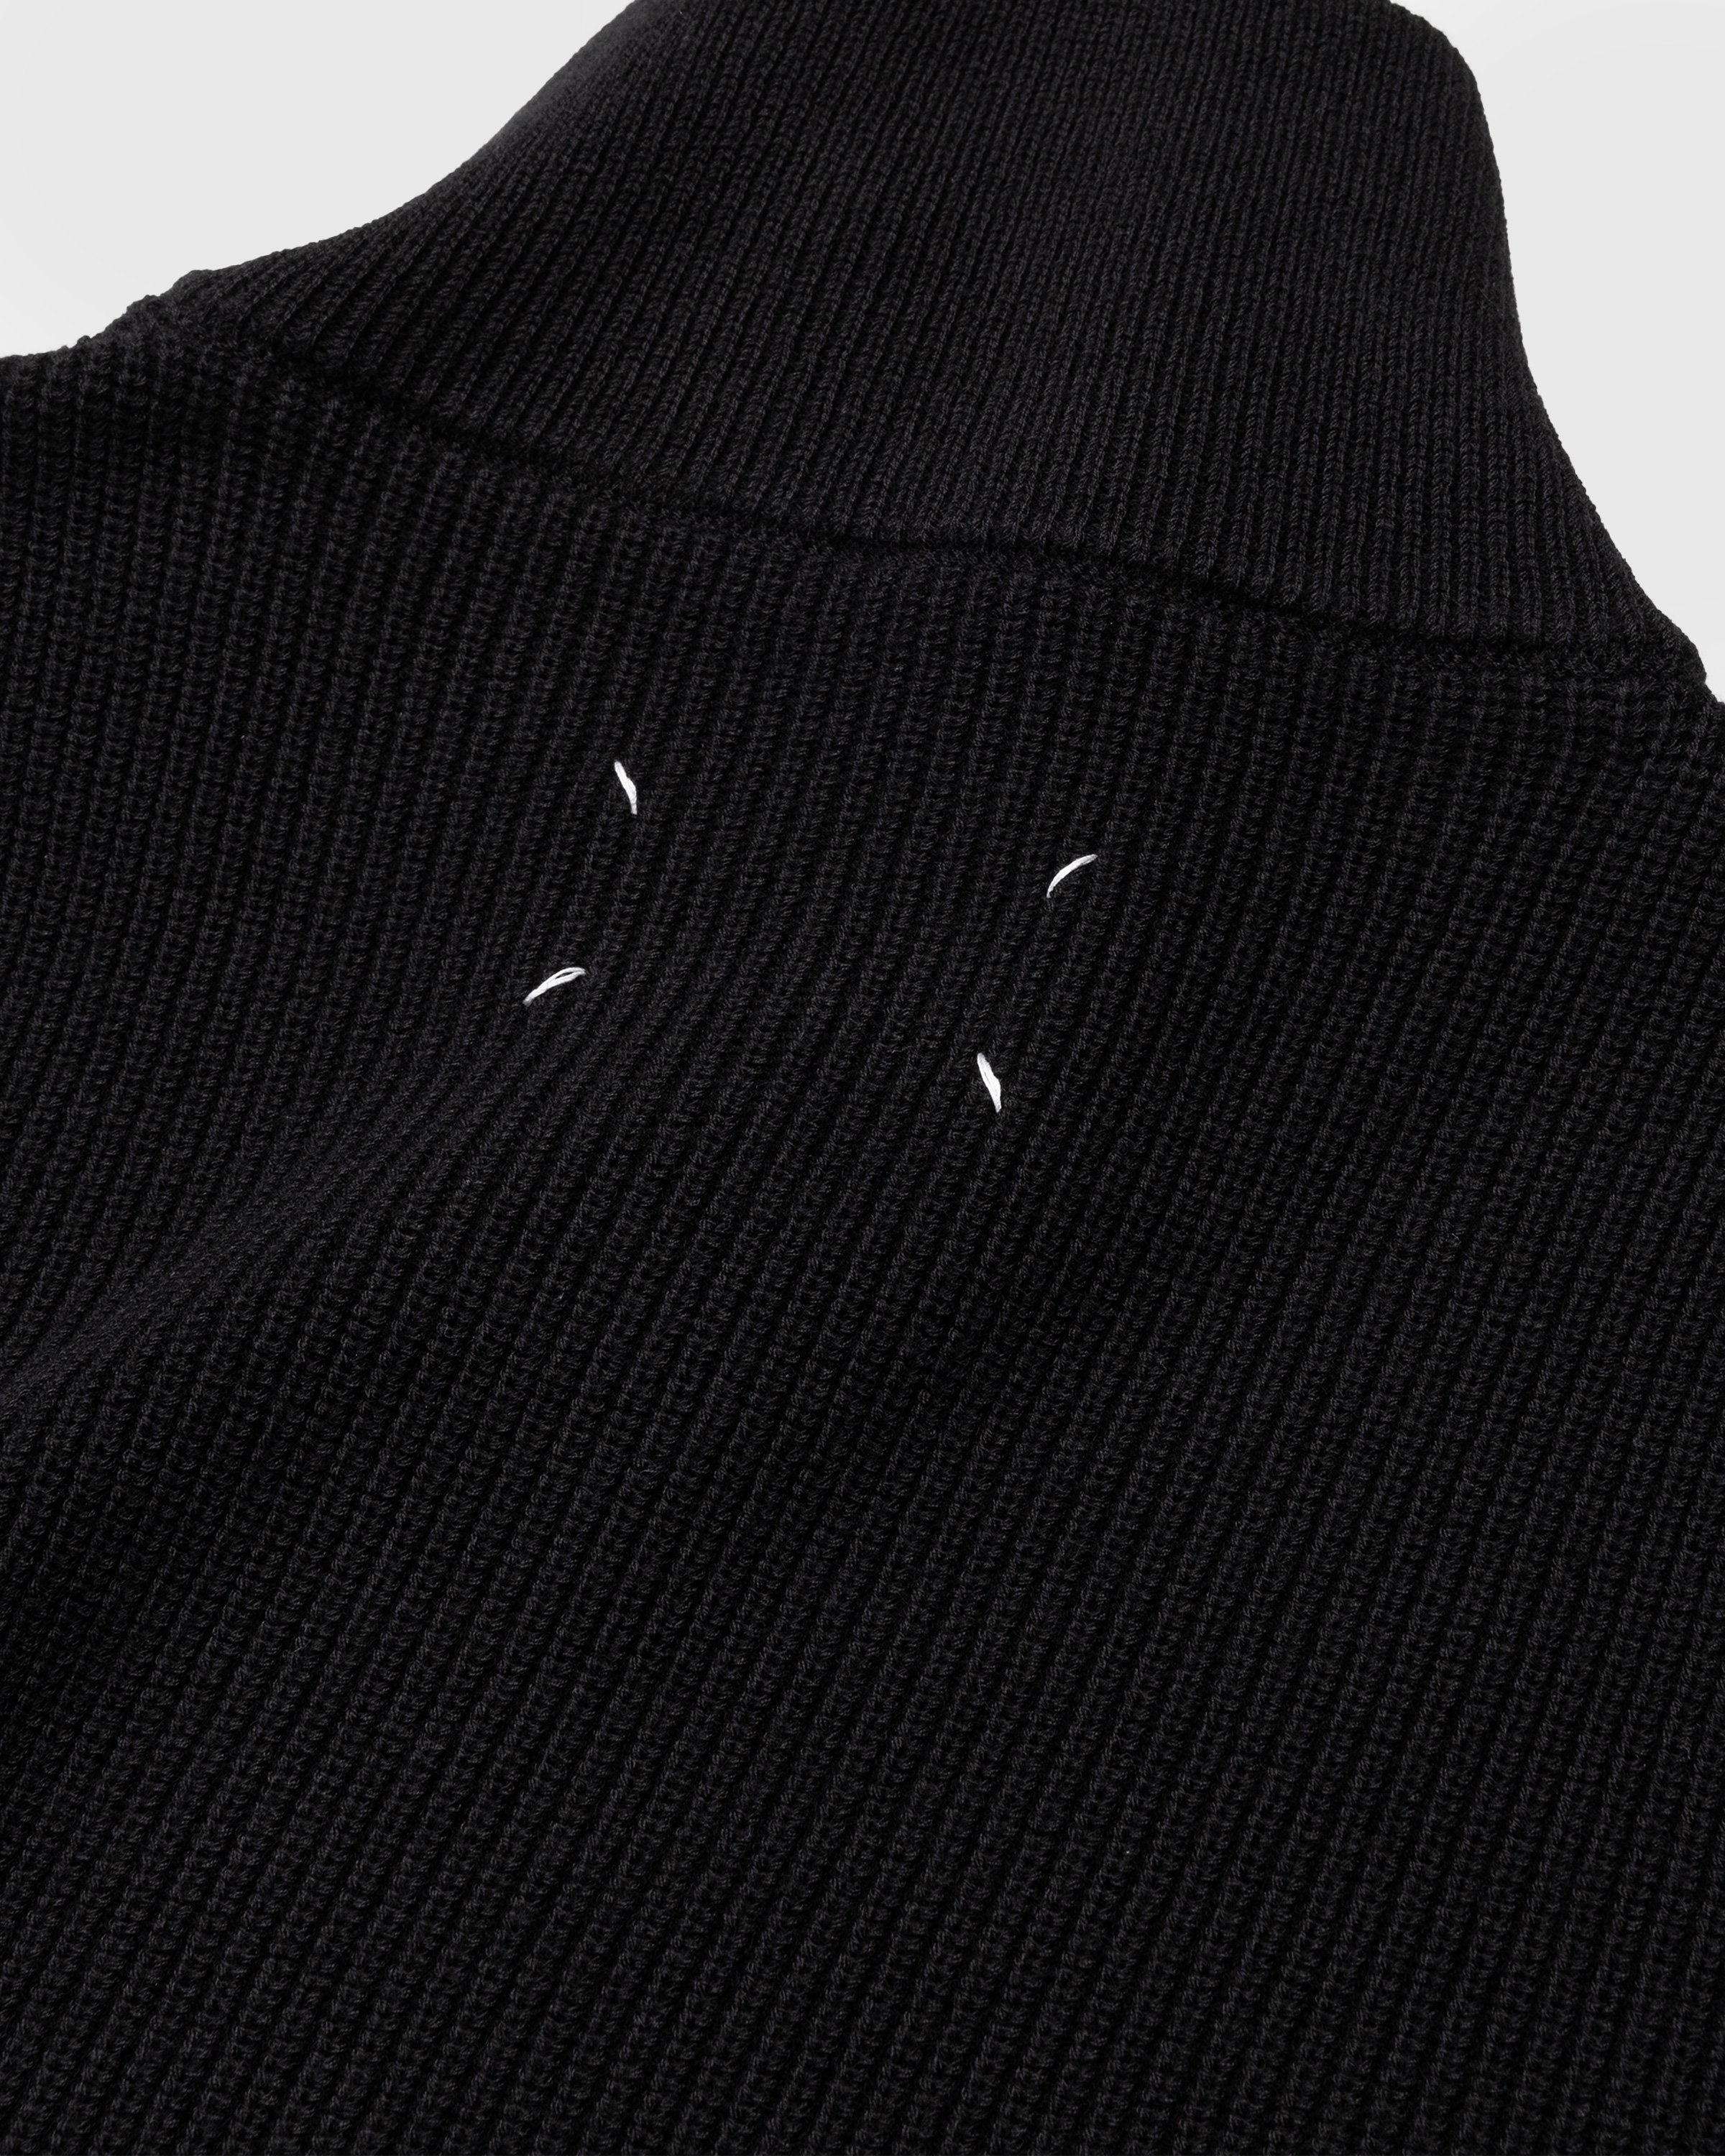 Maison Margiela – Knit Zip-Up Cardigan Black | Highsnobiety Shop